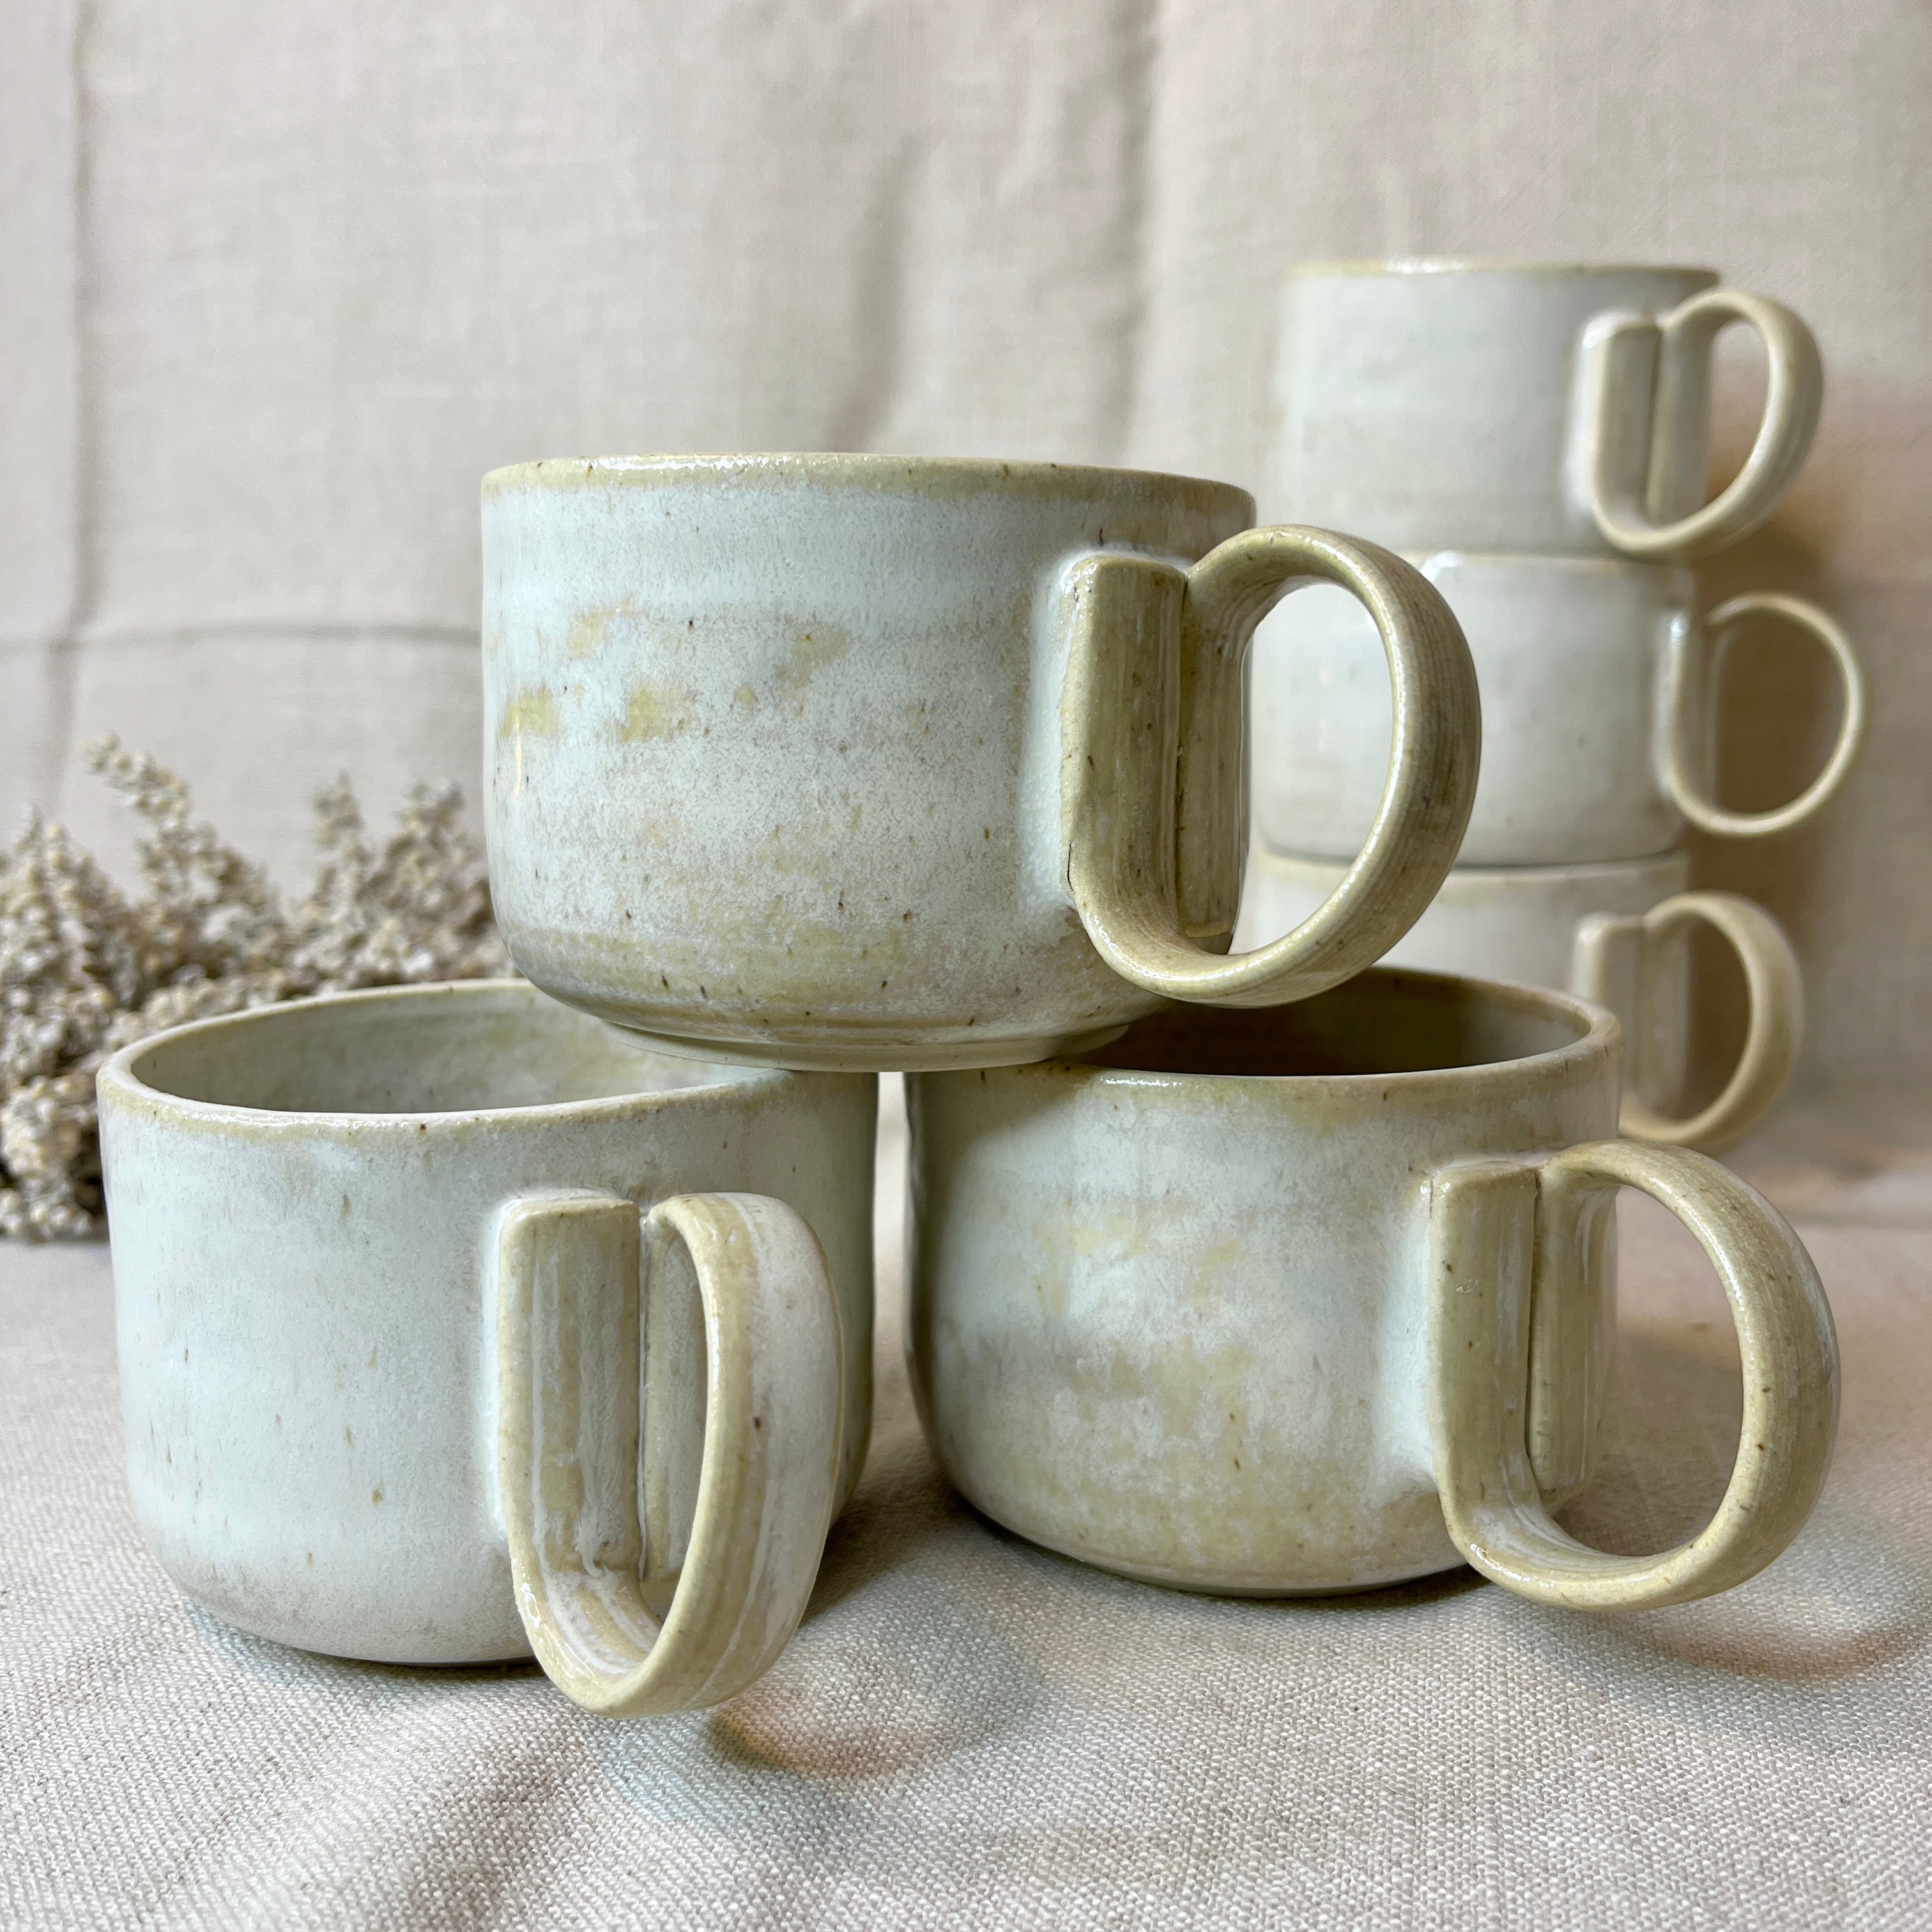 Handmade Ceramic 'Speckled White' Swirl Handle Mug